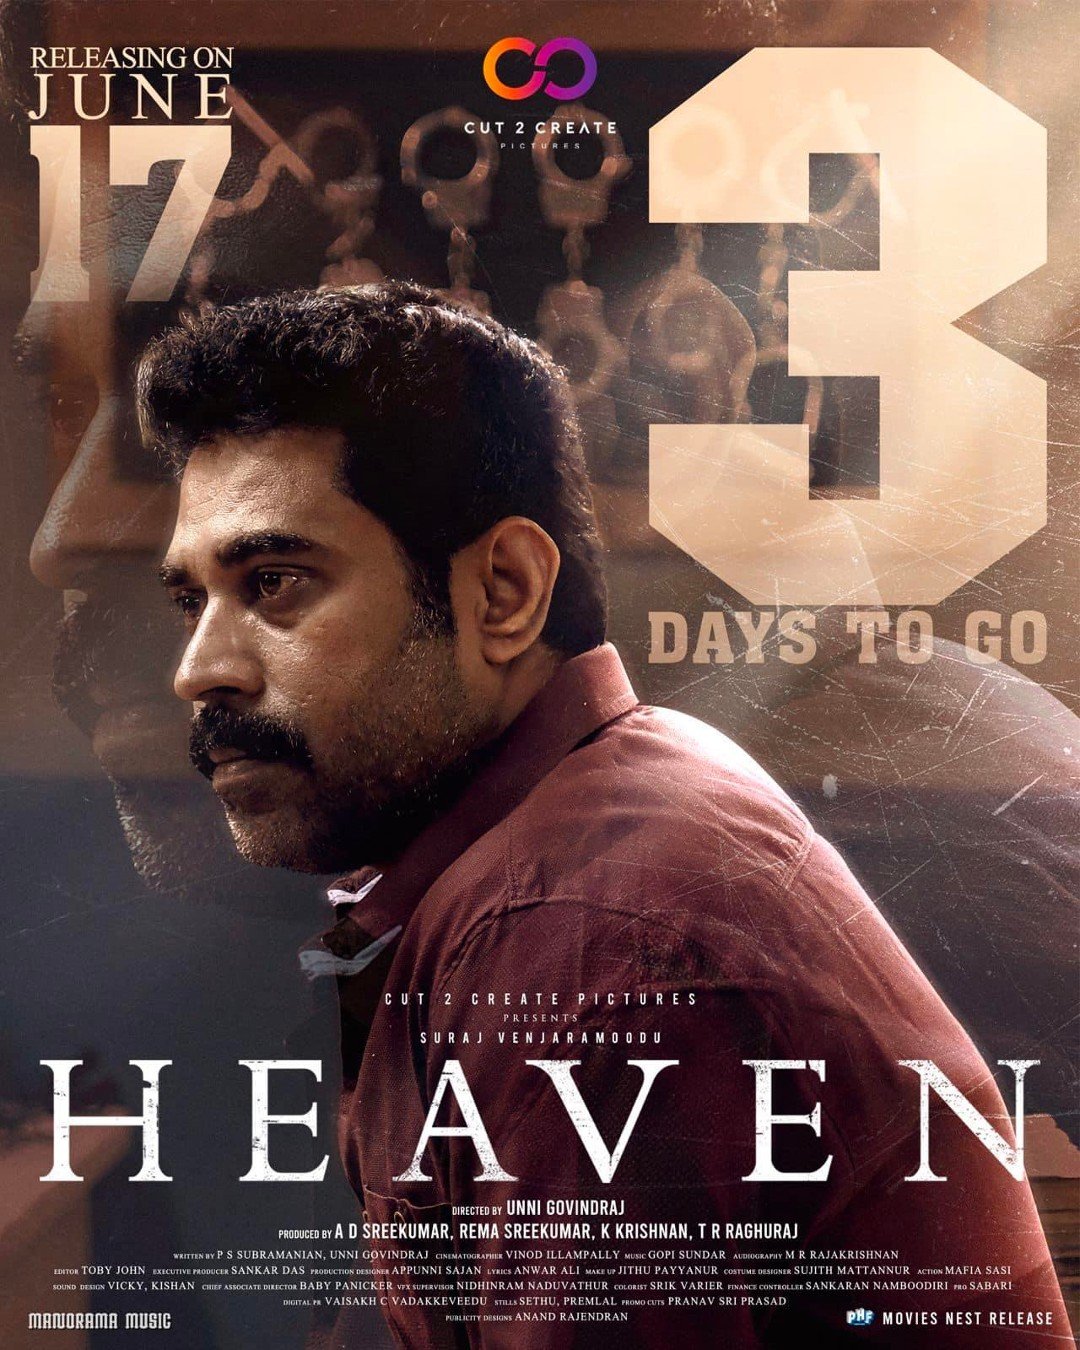 heaven movie review in telugu